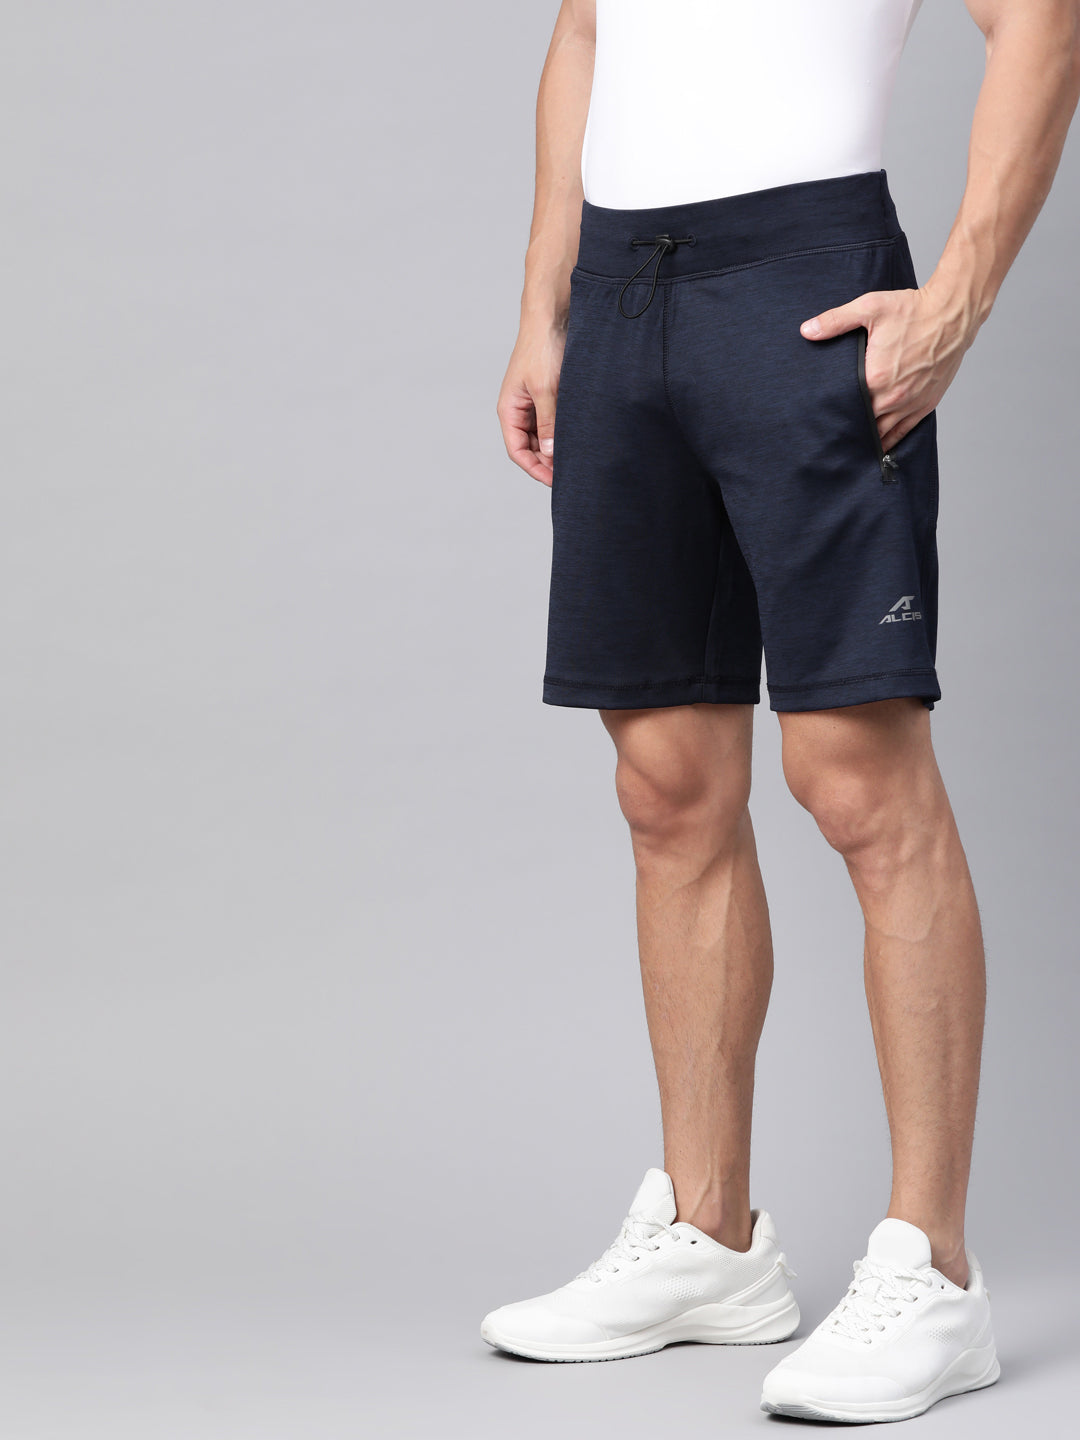 Alcis Mens Solid Navy Shorts